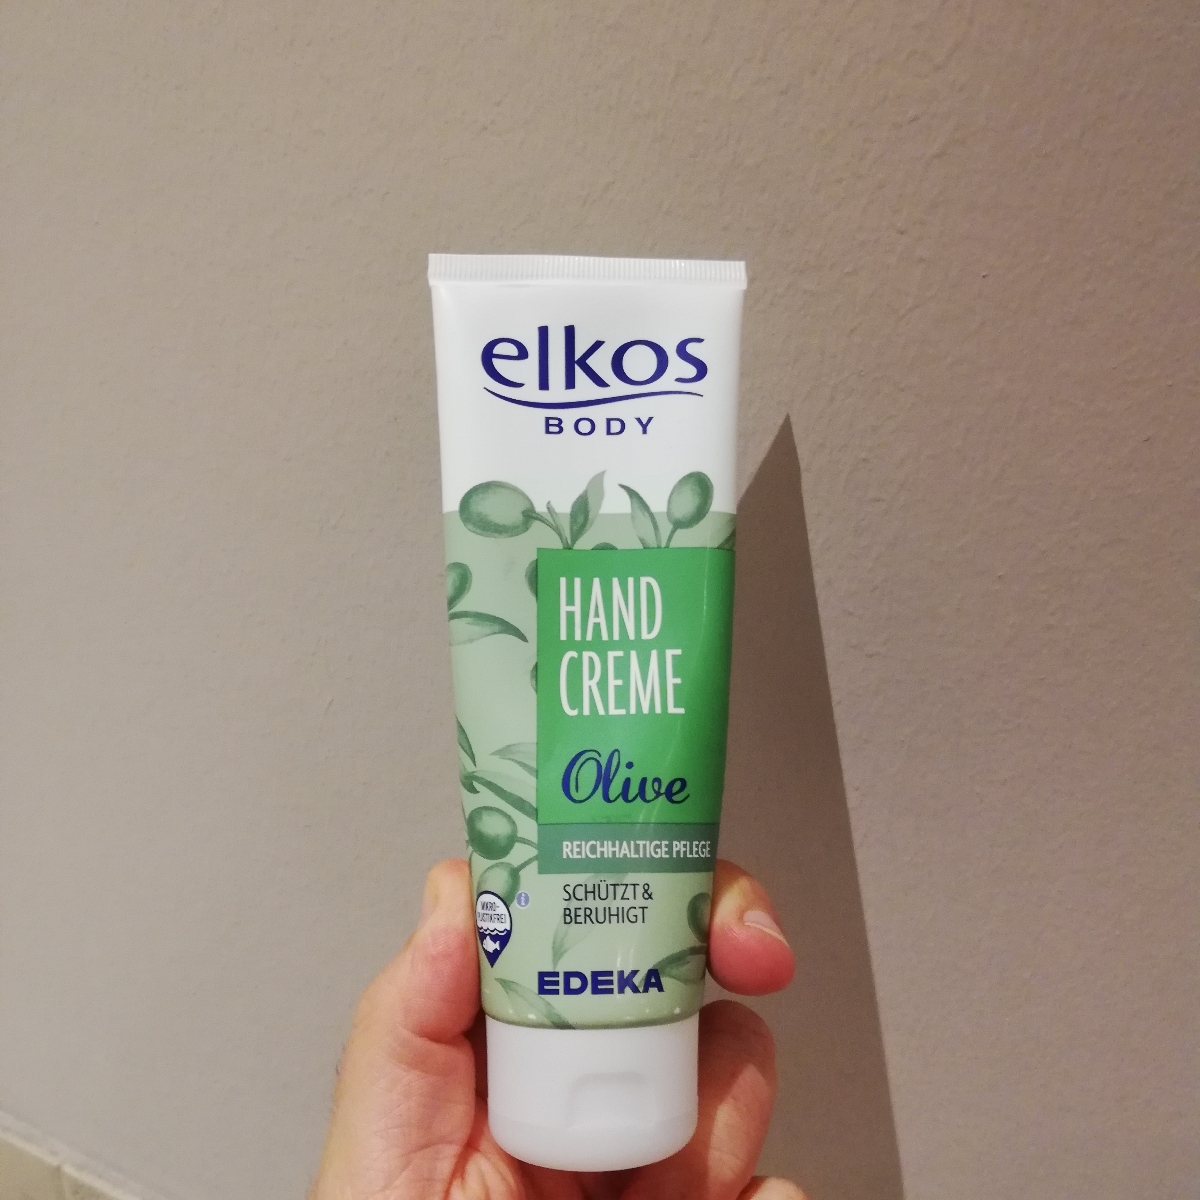 Elkos Body Handcreme Olive Reviews